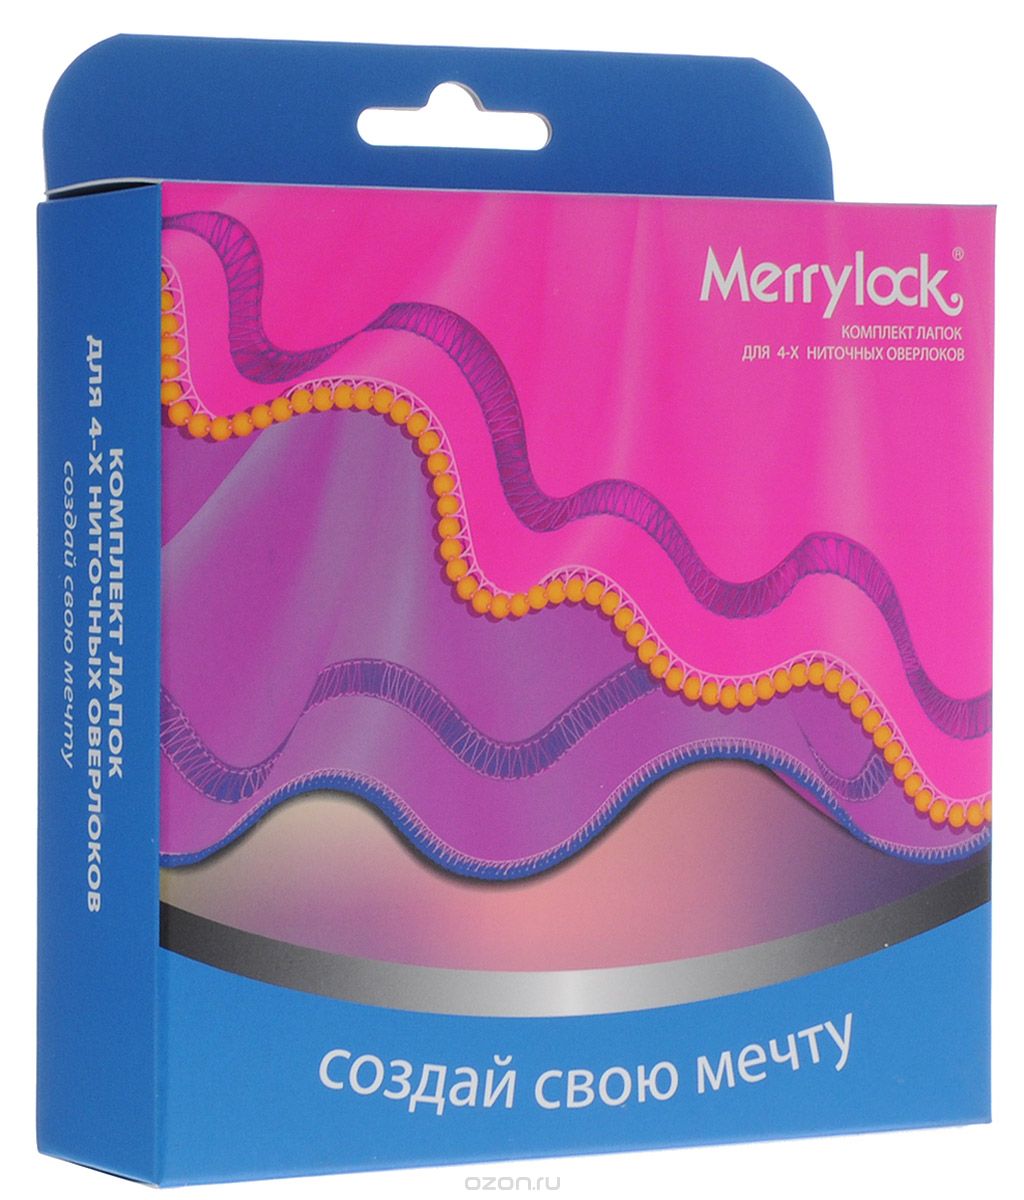 Merrylock    4- 